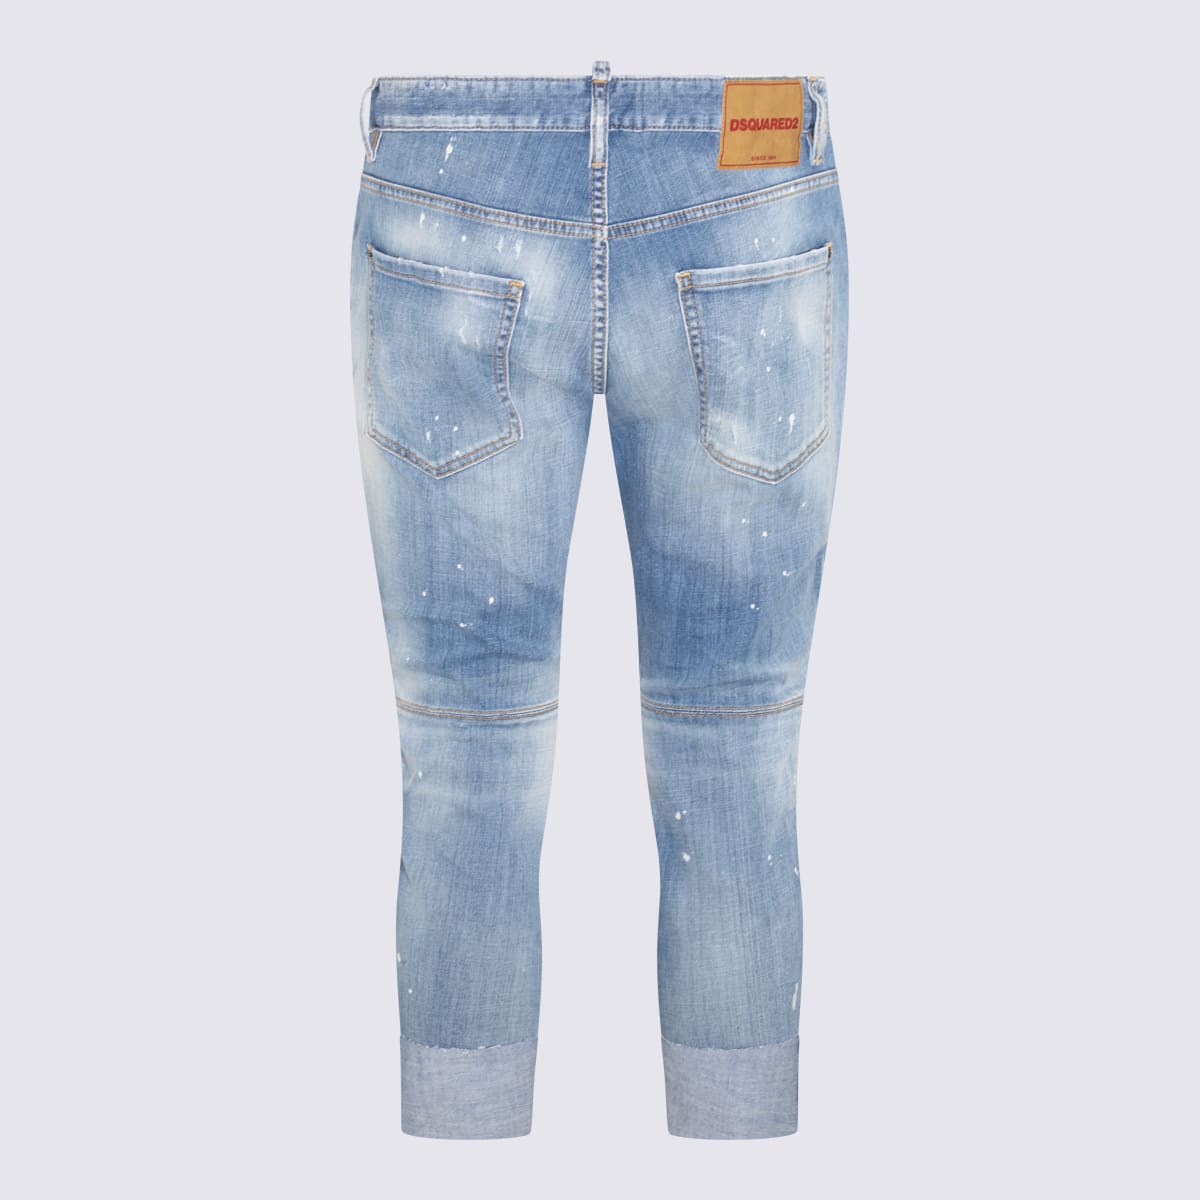 Dsquared2 Navy Blue Denim Jeans